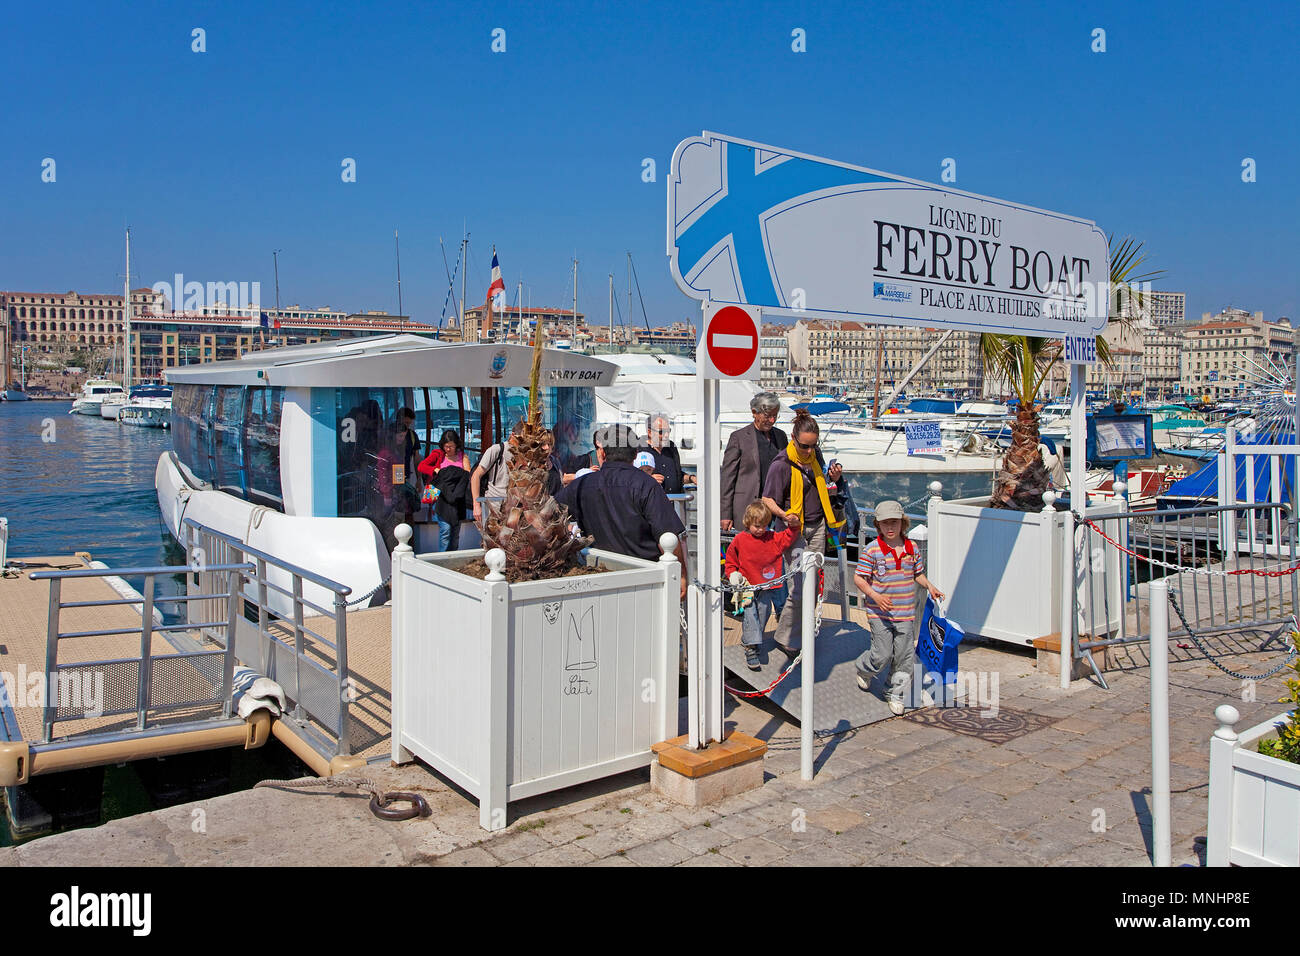 Ferry boat at harbour Vieux Port, Marseille, Bouches-du-Rhone, Provence-Alpes-Côte d’Azur, South France, France, Europe Stock Photo